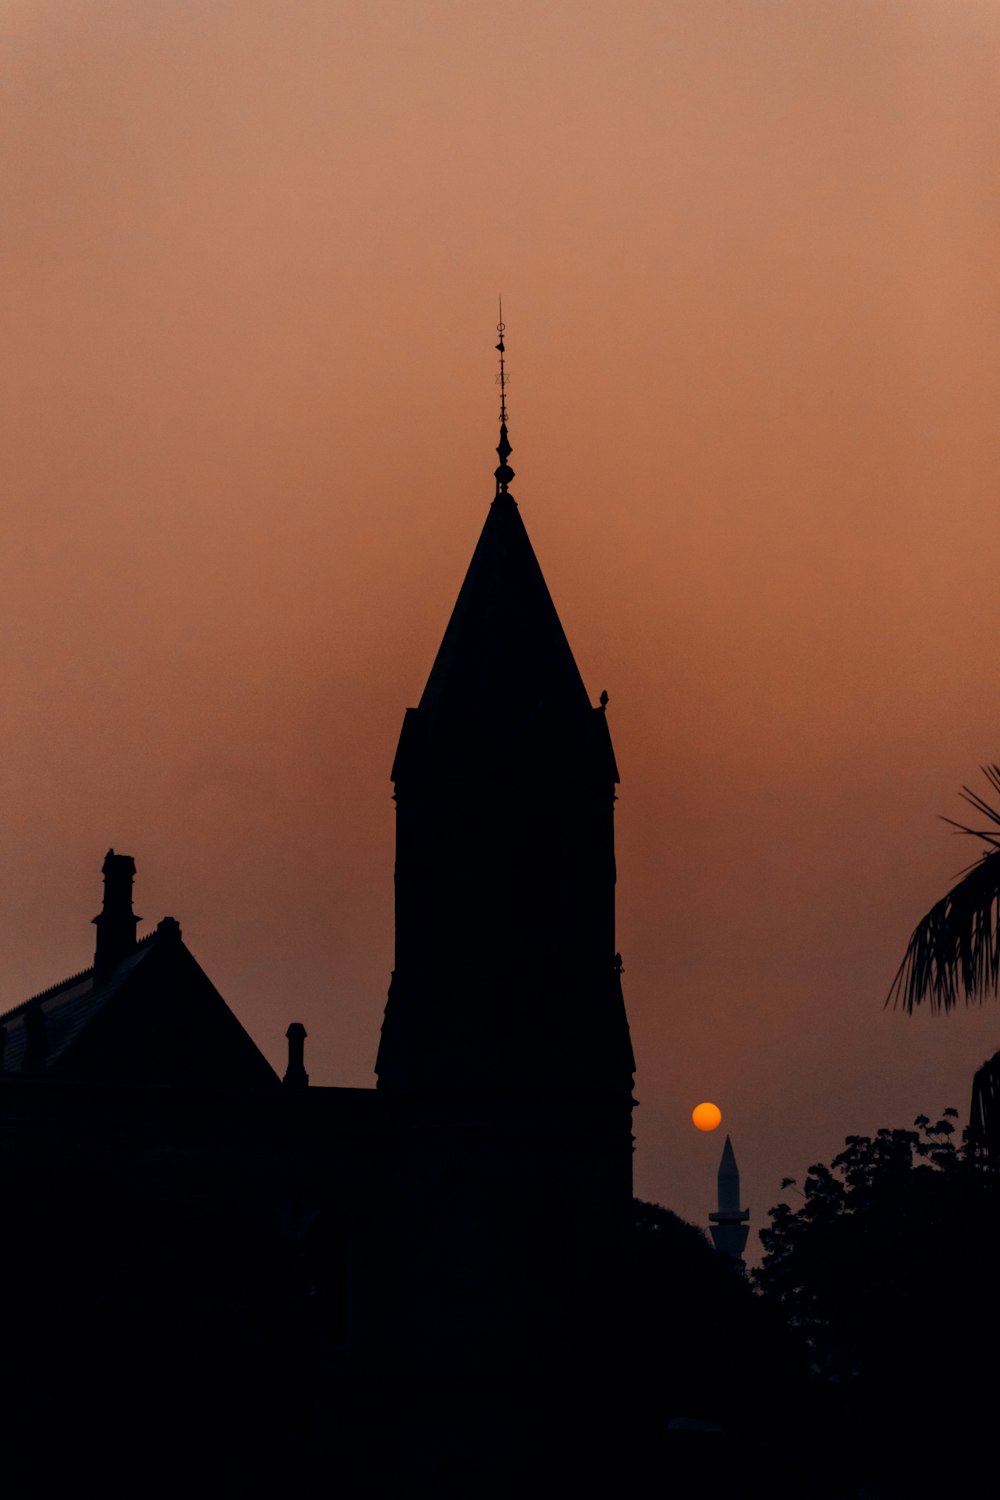 the sun is setting behind a church steeple